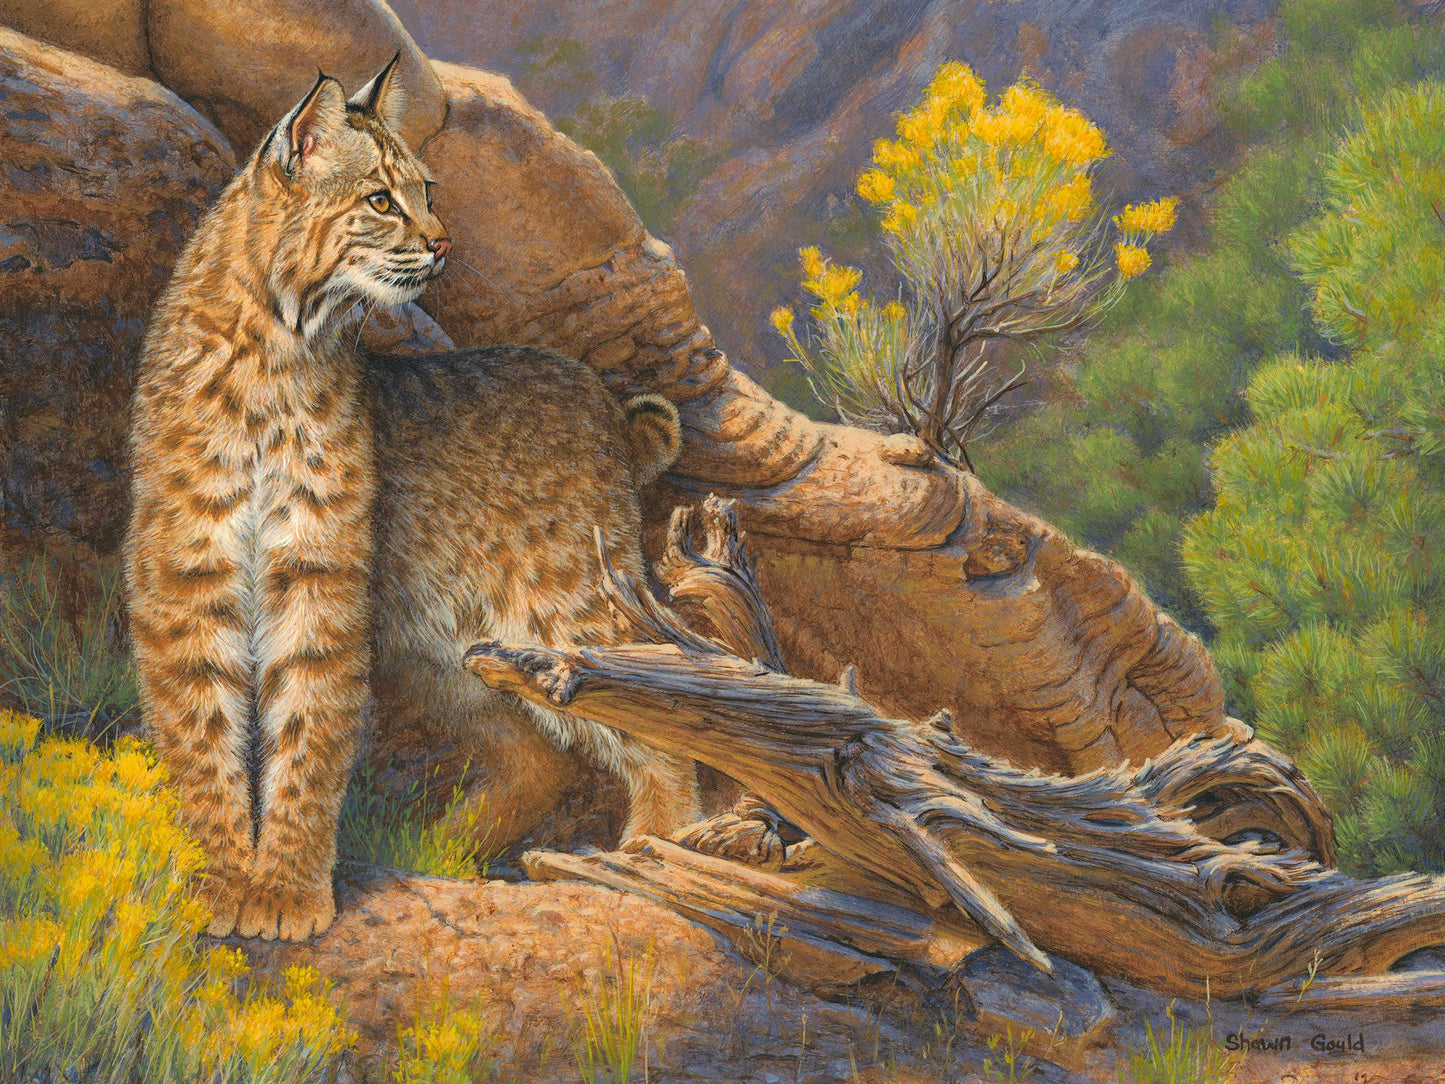 Dry Ravine Bobcat-Painting-Shawn Gould-Sorrel Sky Gallery